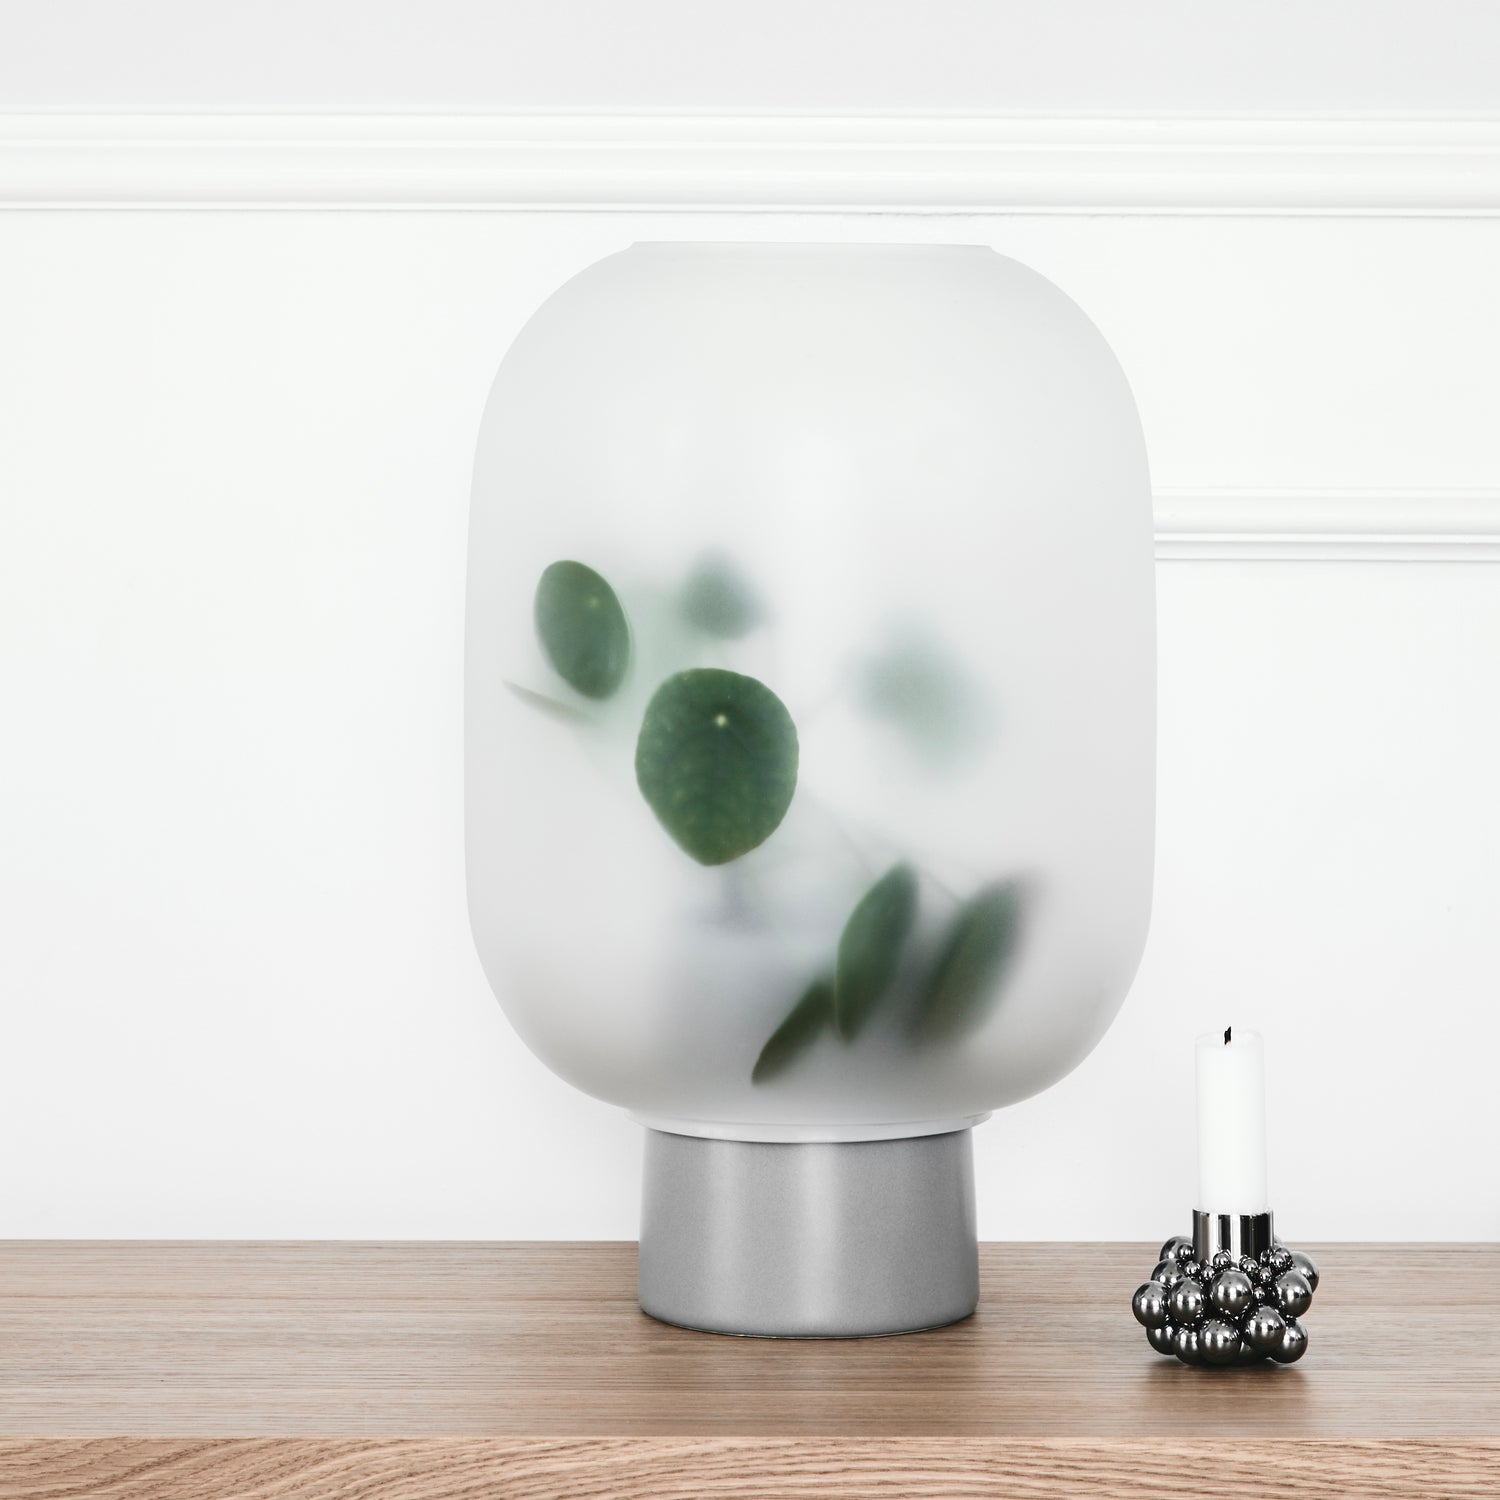 Nebl flowerpot large - Minor flaws